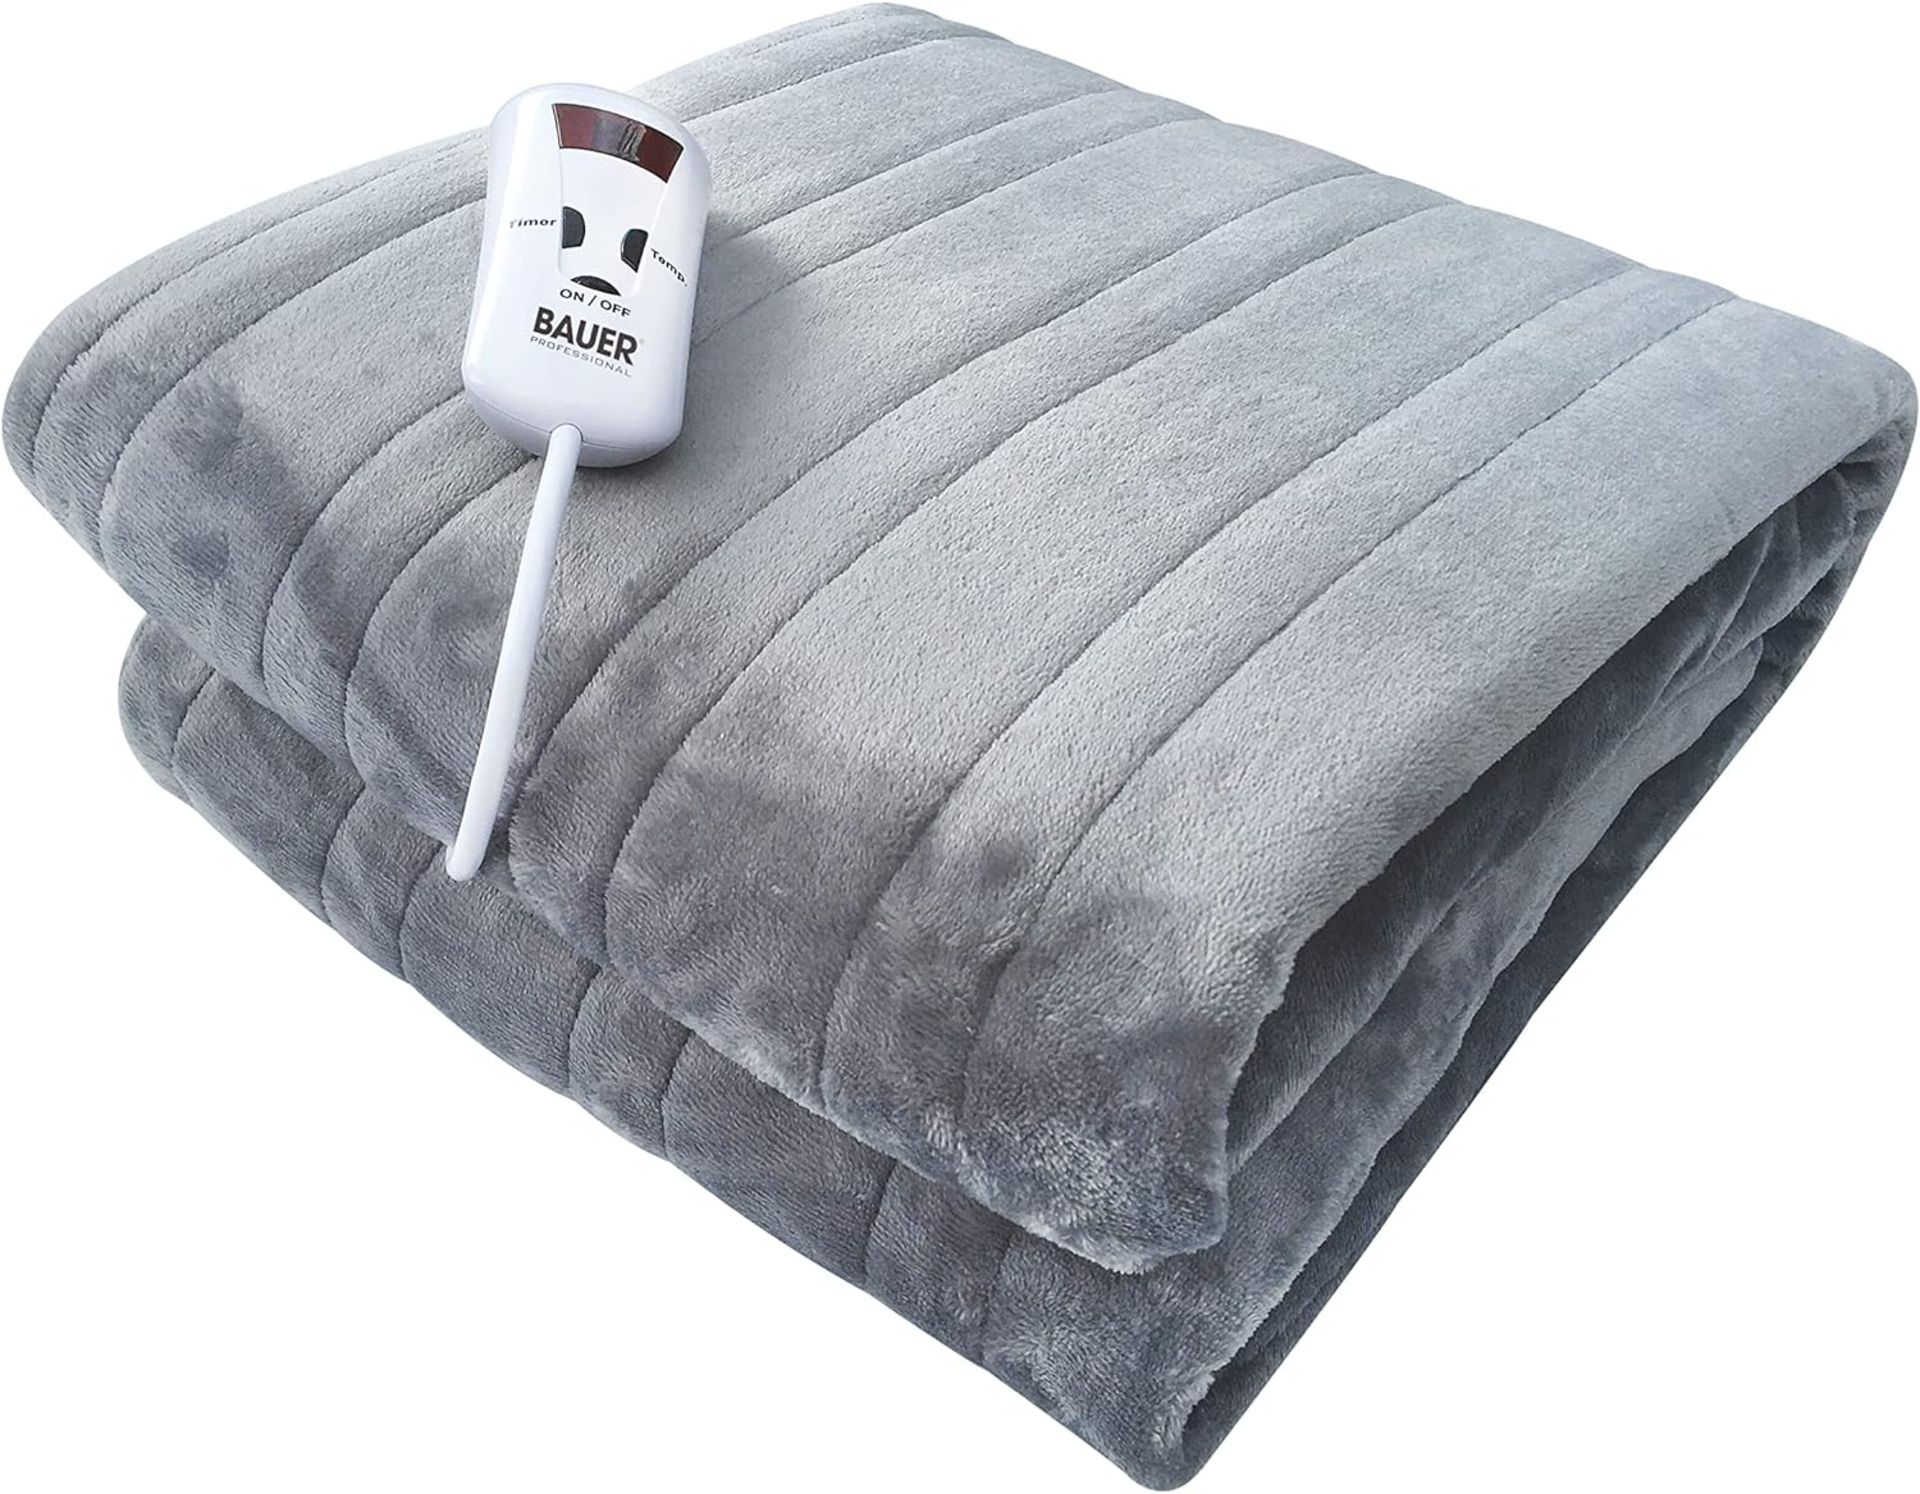 Bauer Electric Heated Throw Blanket with Luxury Fleece Lining | 10 Heat Levels | Machine